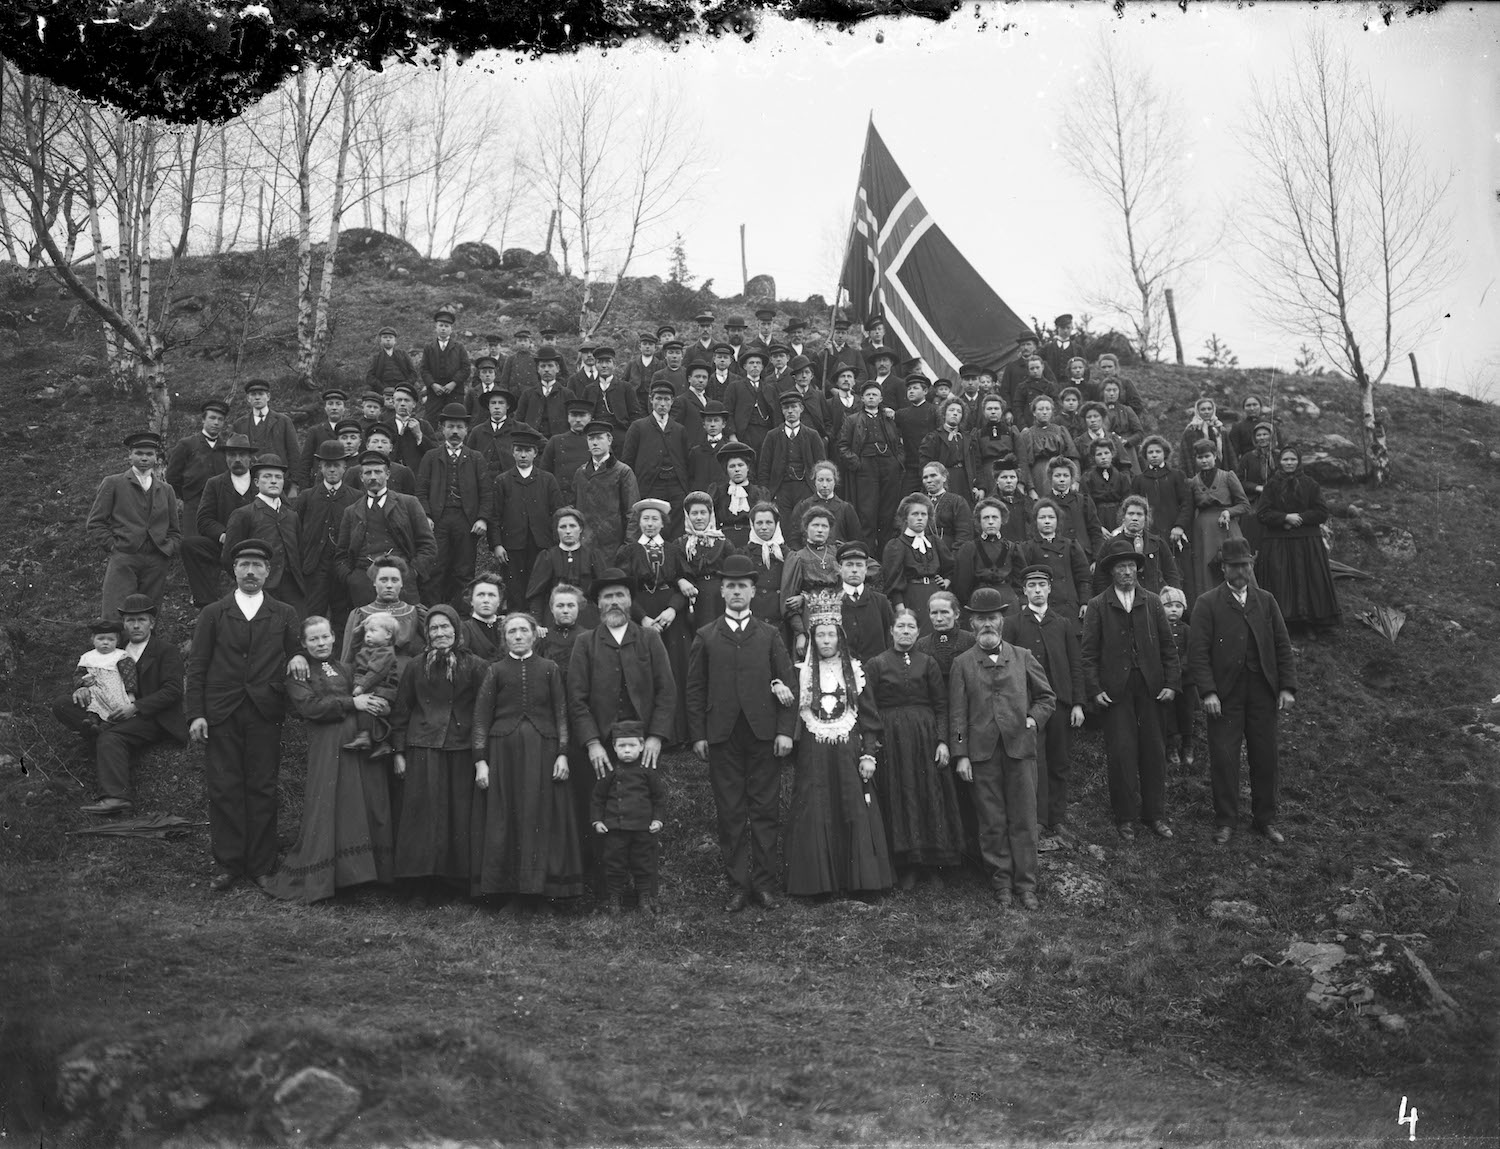 Sogndal Norway 1900